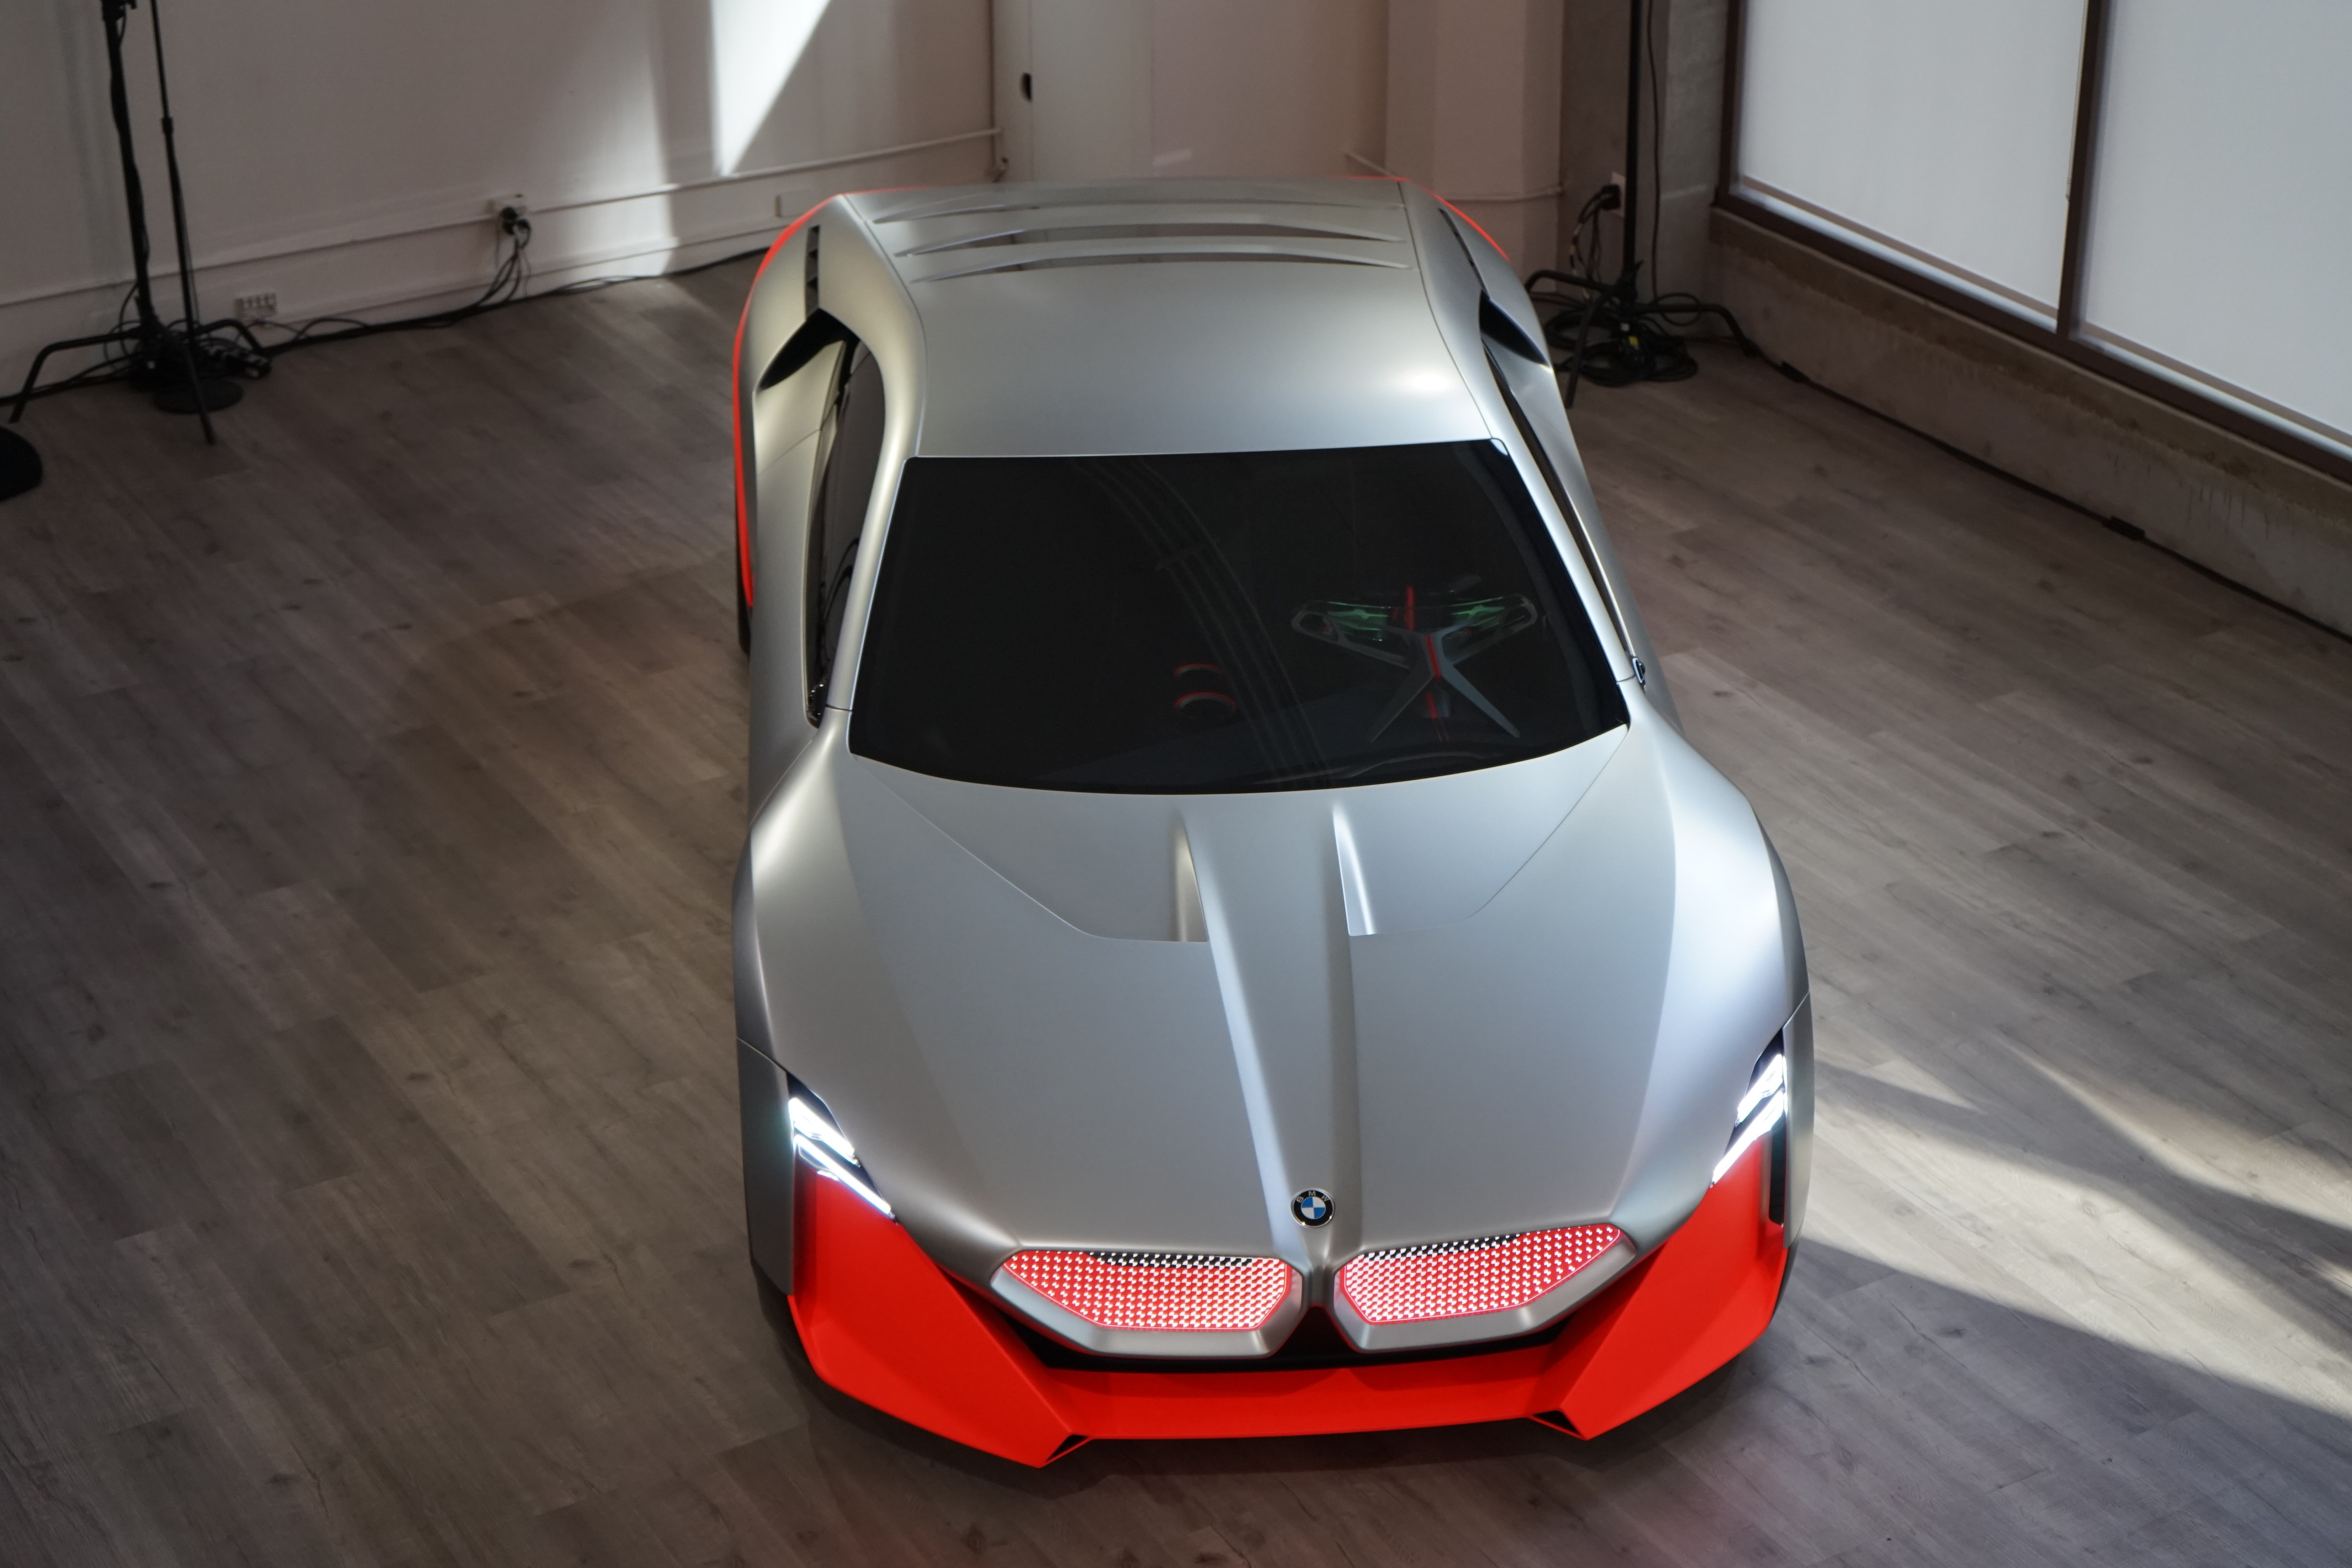 BMW M Vision NEXT’s exterior designer, Jose Alberto Casas Peña